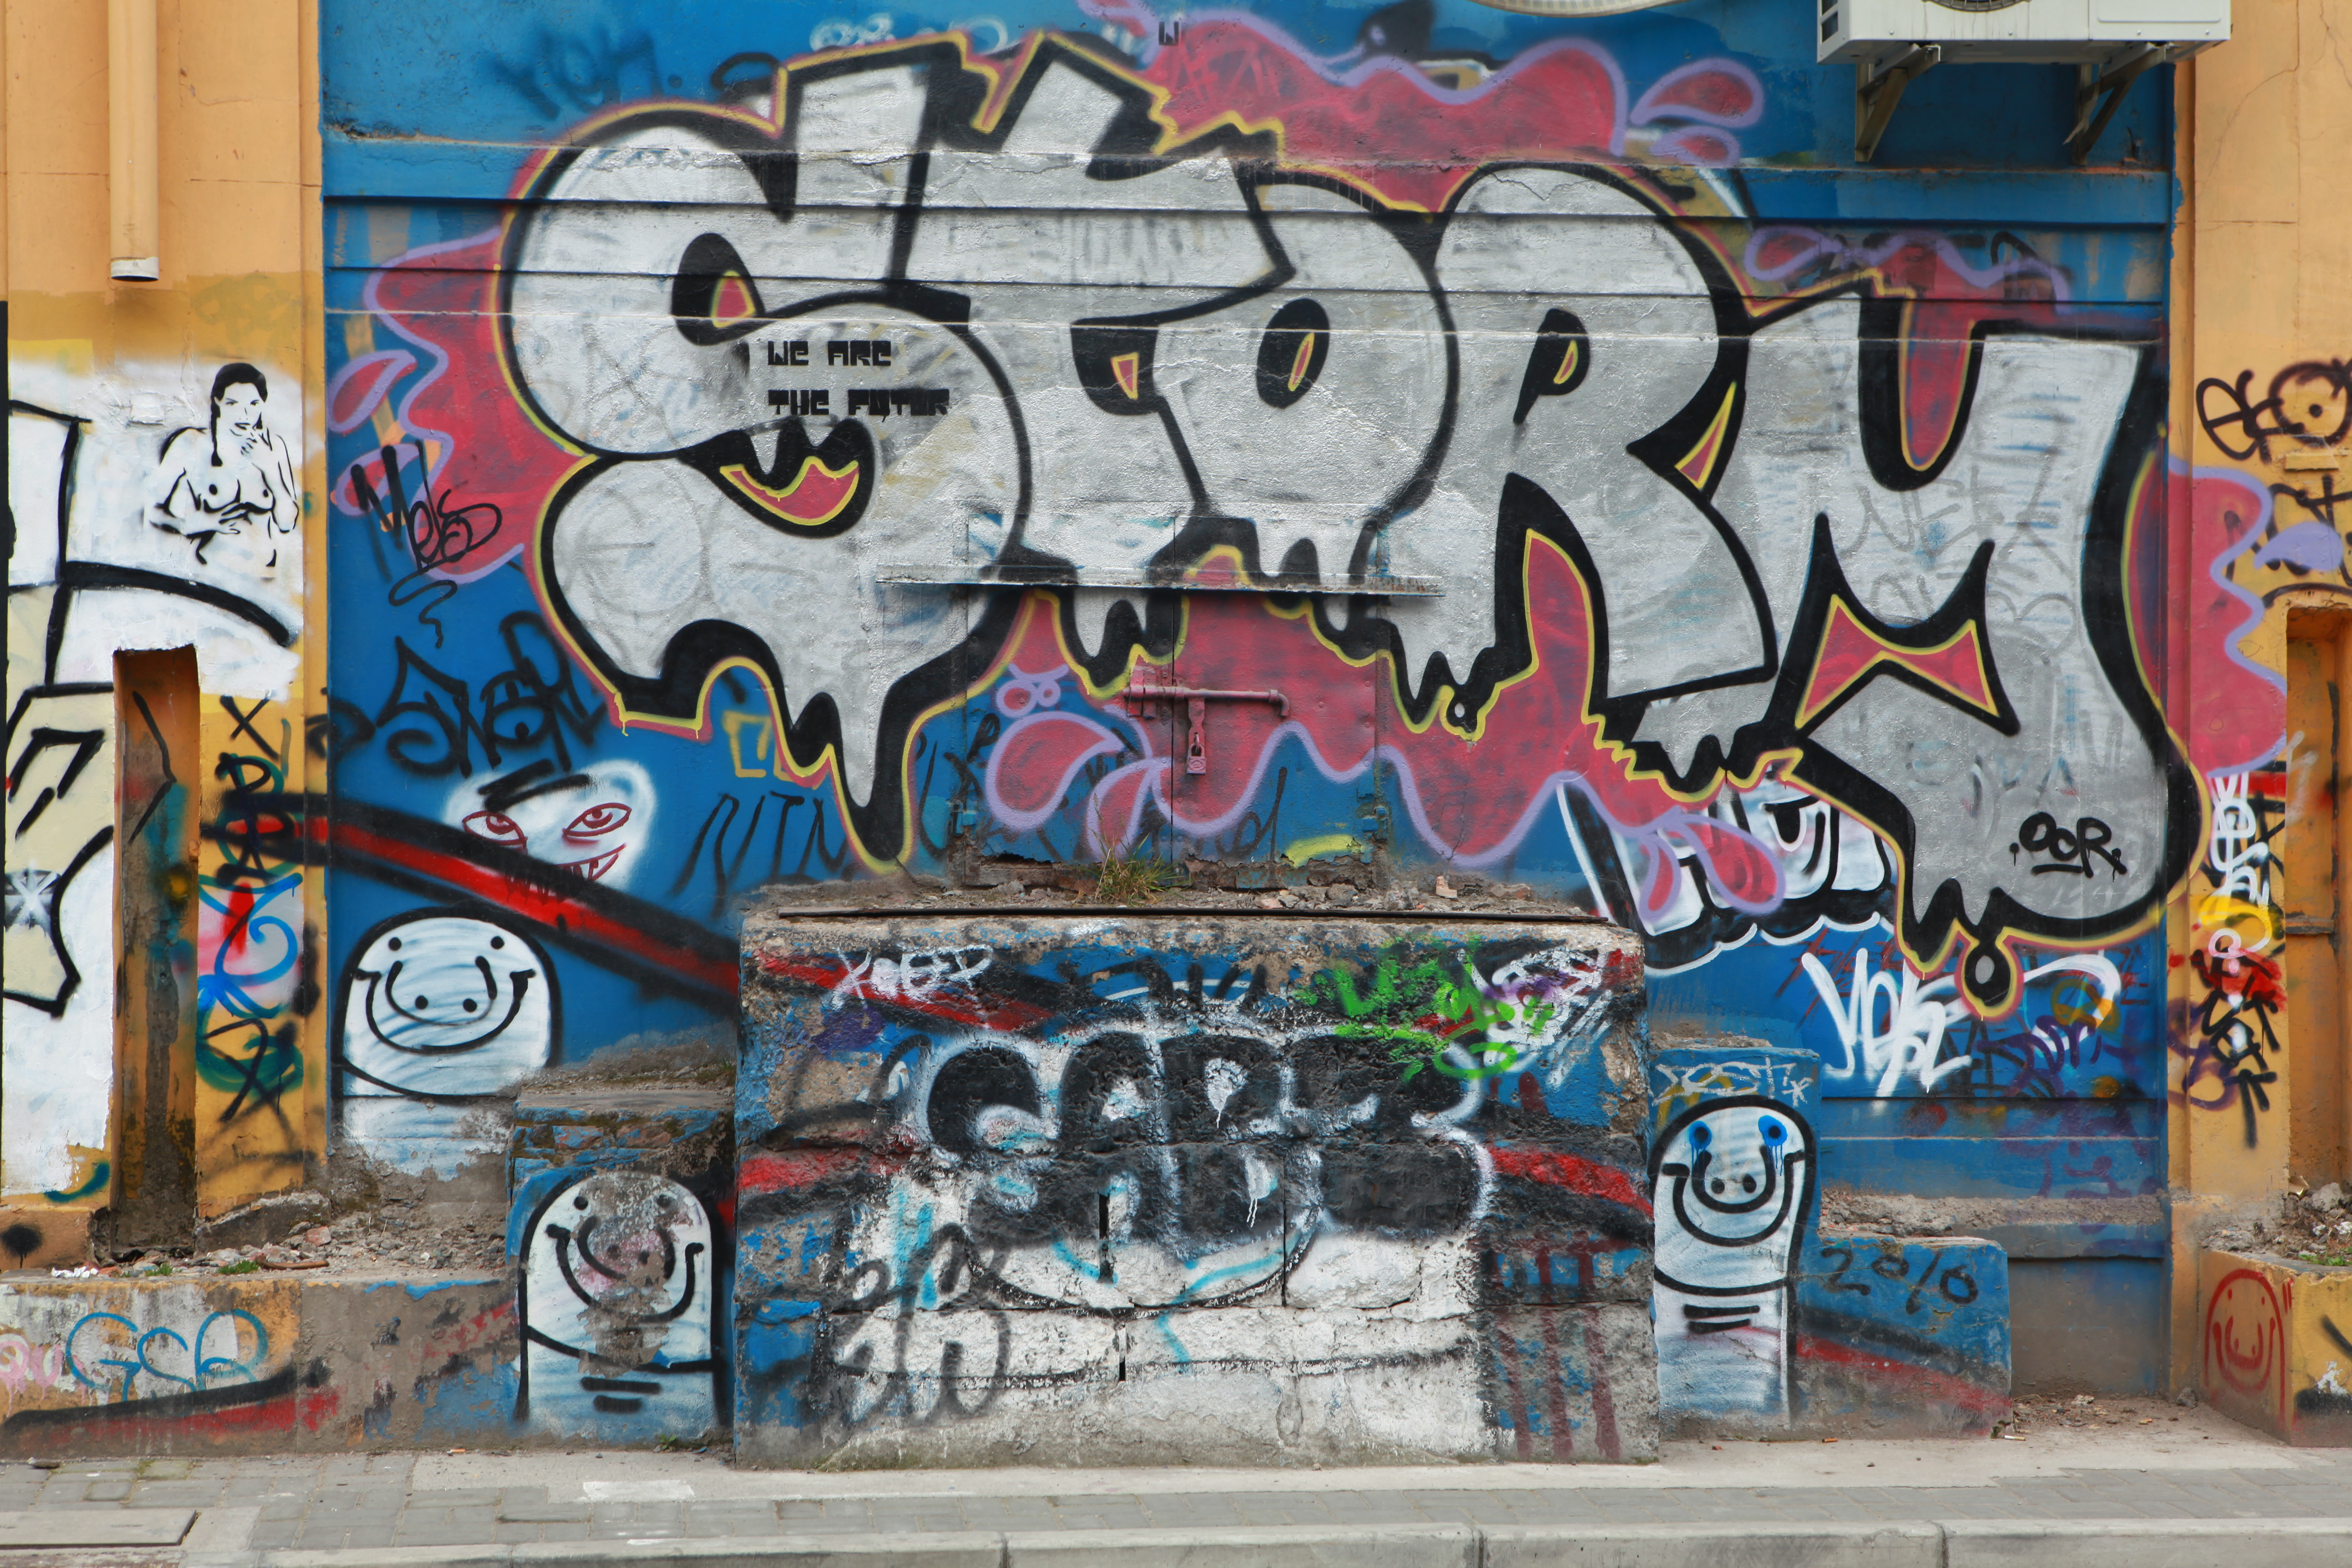 Старая стена с граффити